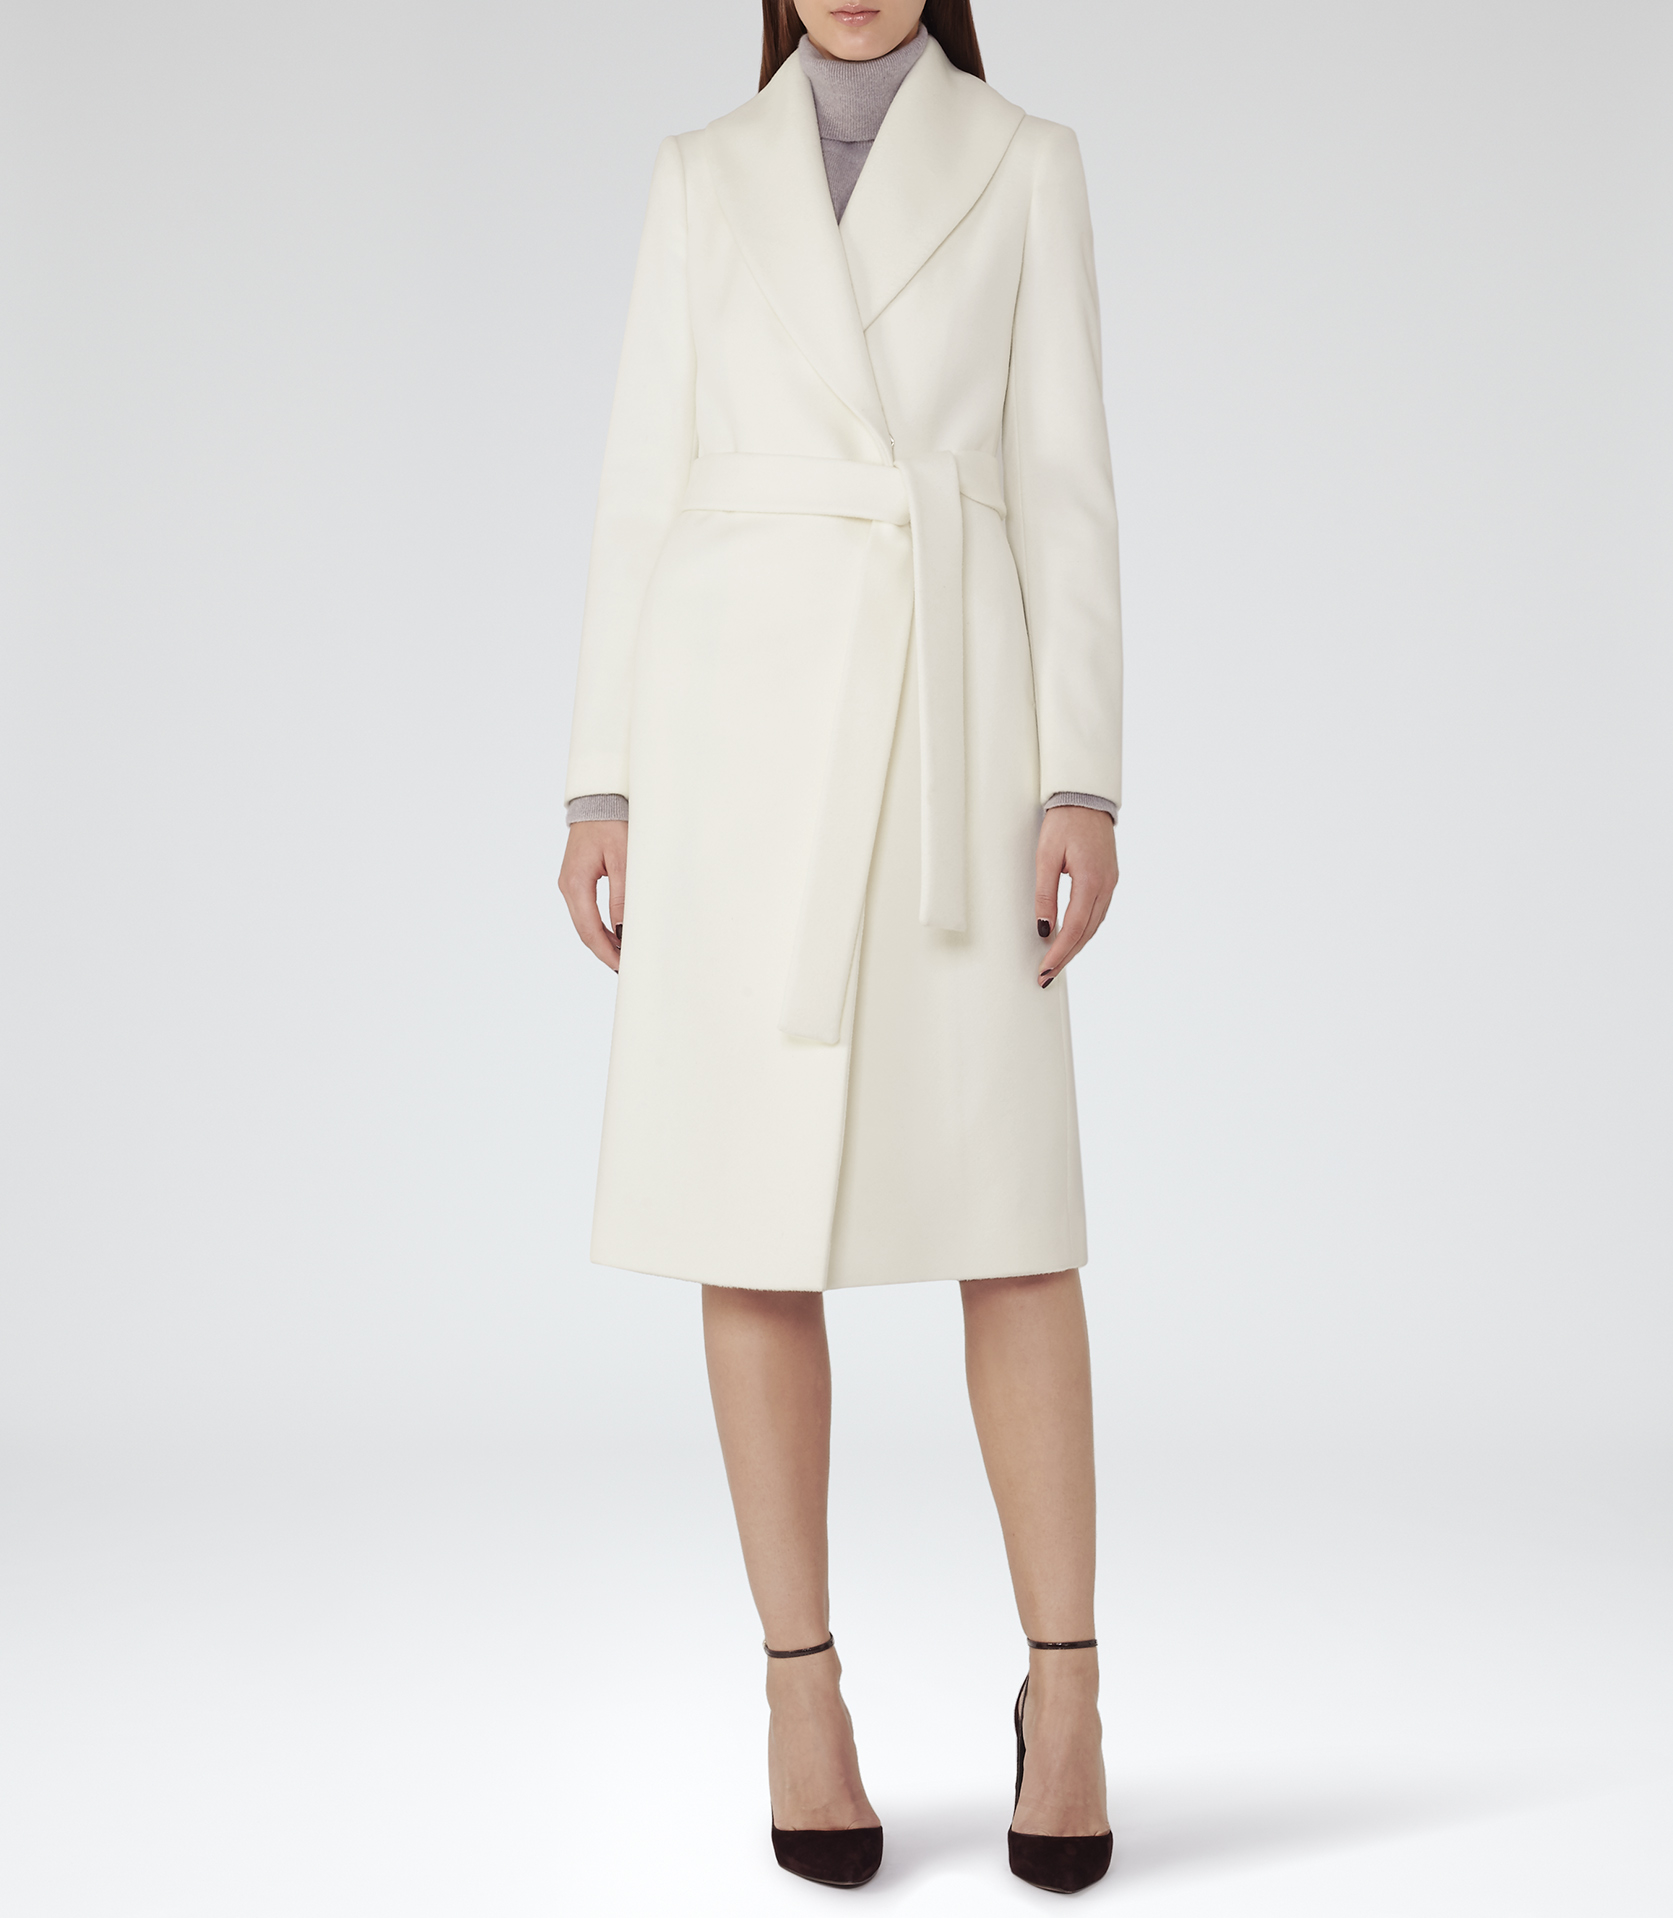 White Wrap Coat | Fashion Women's Coat 2017